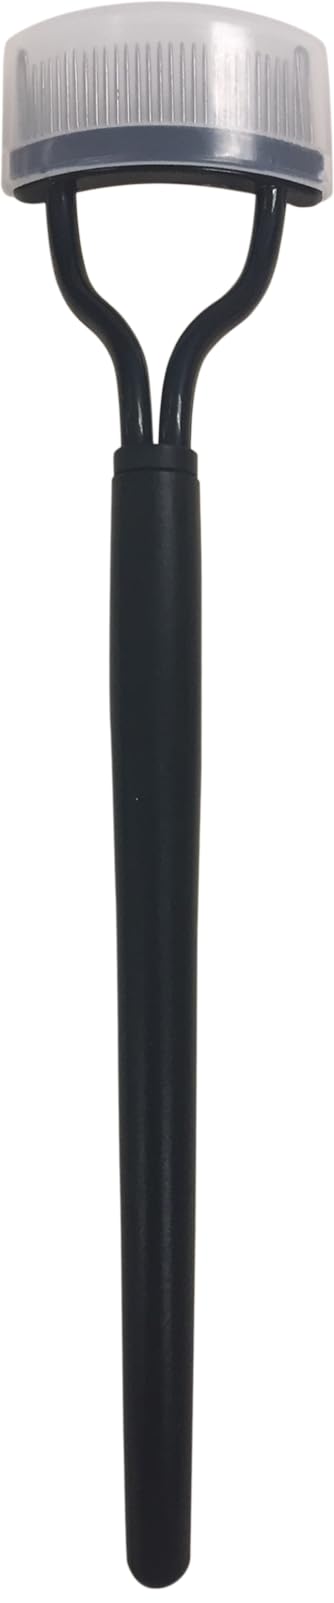 TRIM Professionail Eyelash Comb with Cover, Eyelash Separator Mascara Applicator Eyelash Definer With Comb Cover Arc Designed Cosmetic Brushes Tool Black, 1pc